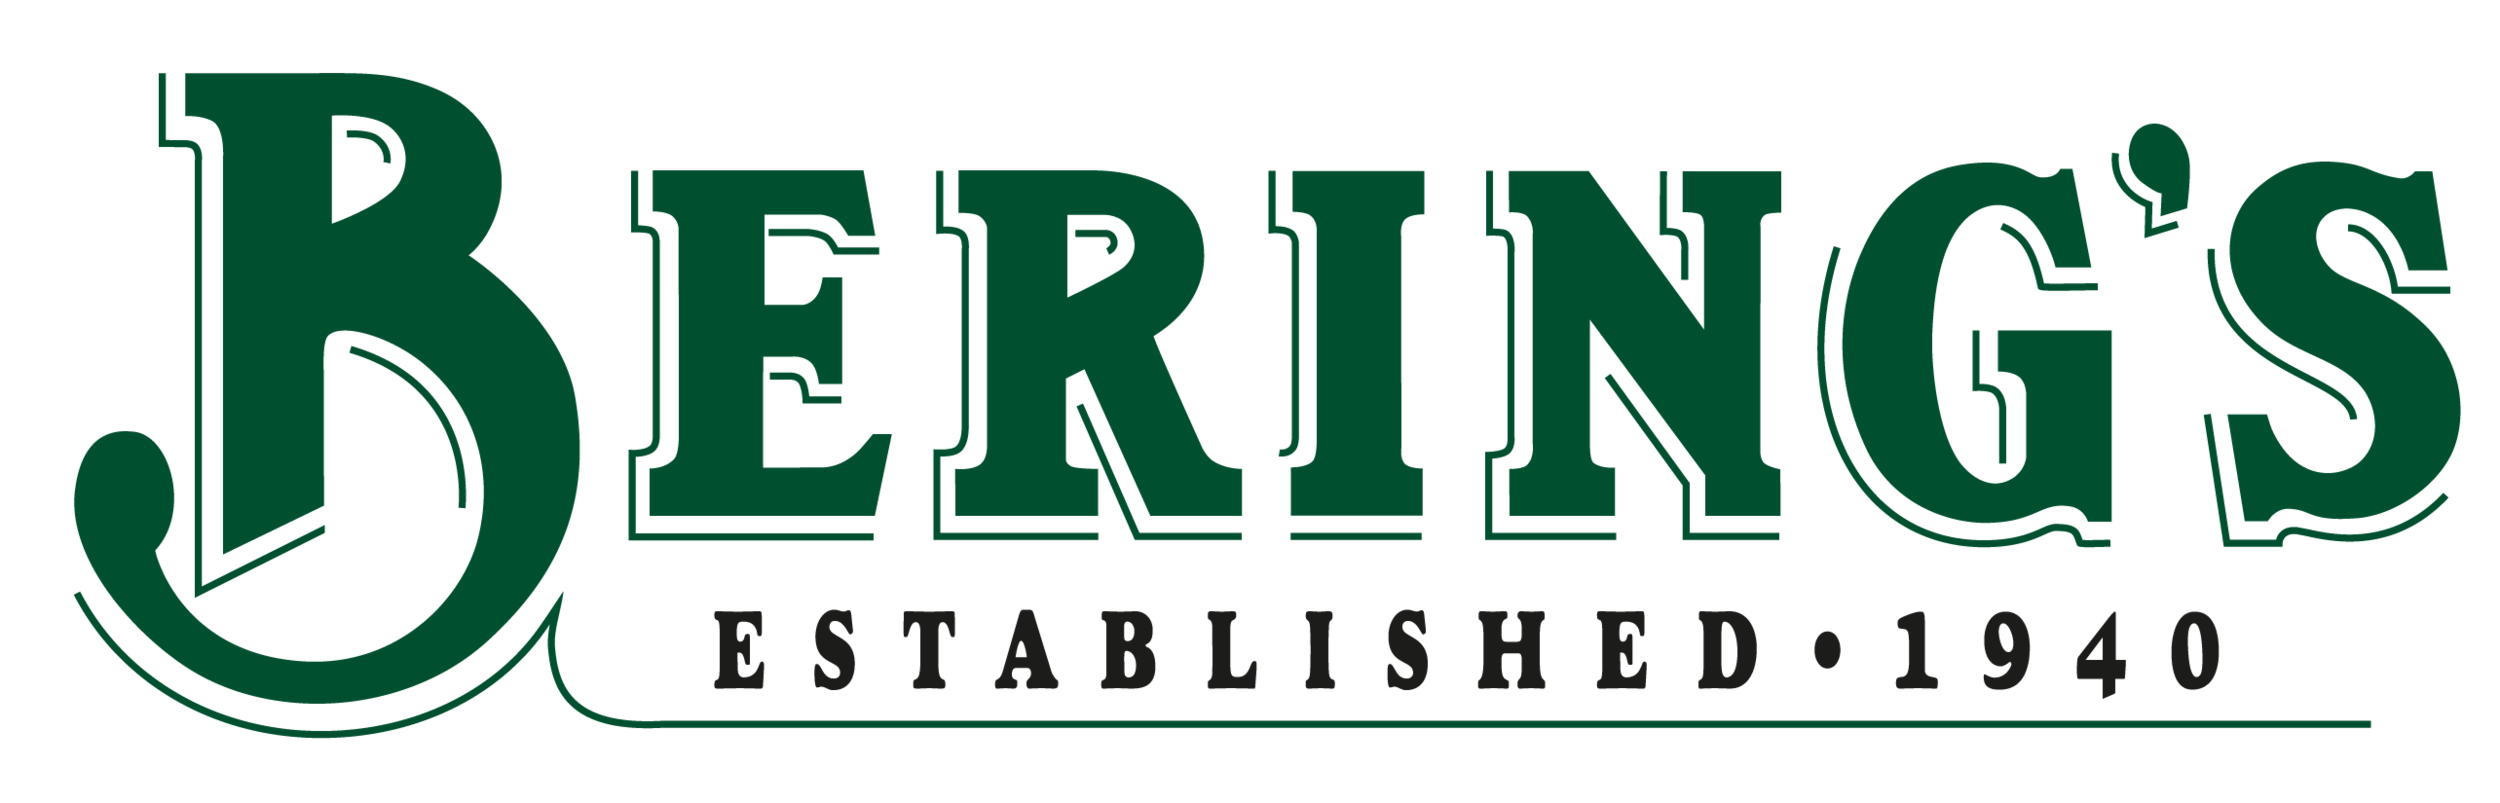 Berings-3435-Classic-Green-and-Black-Logo.png